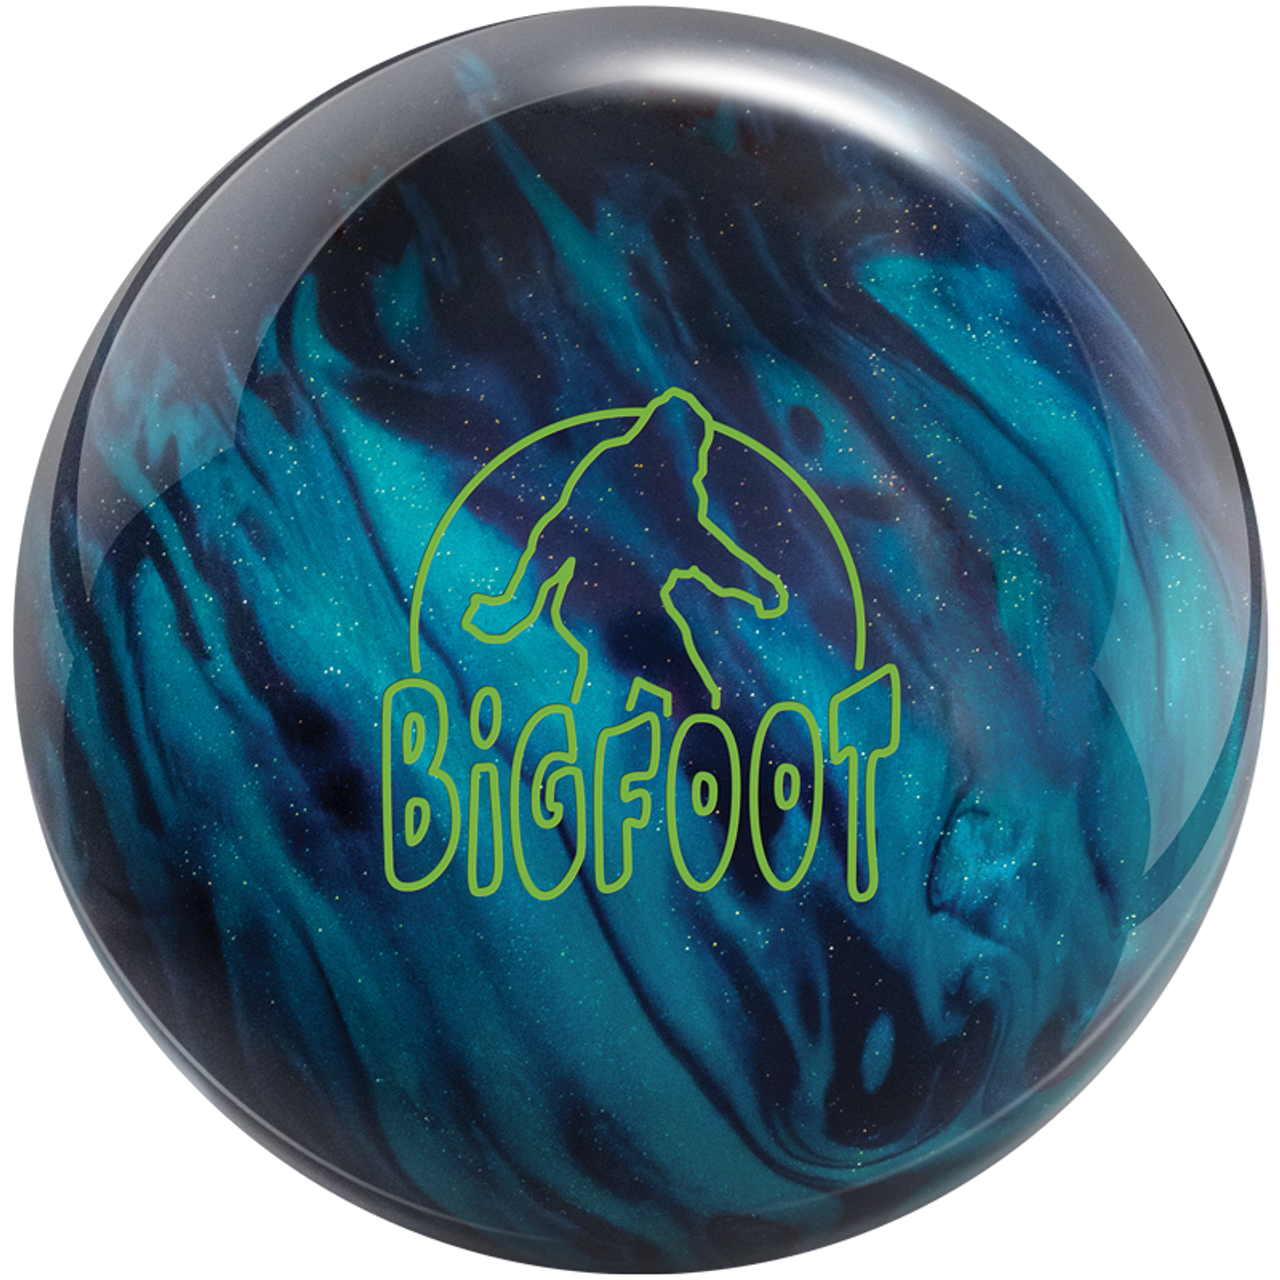 Radical Bigfoot Hybrid Bowling Ball FREE SHIPPING